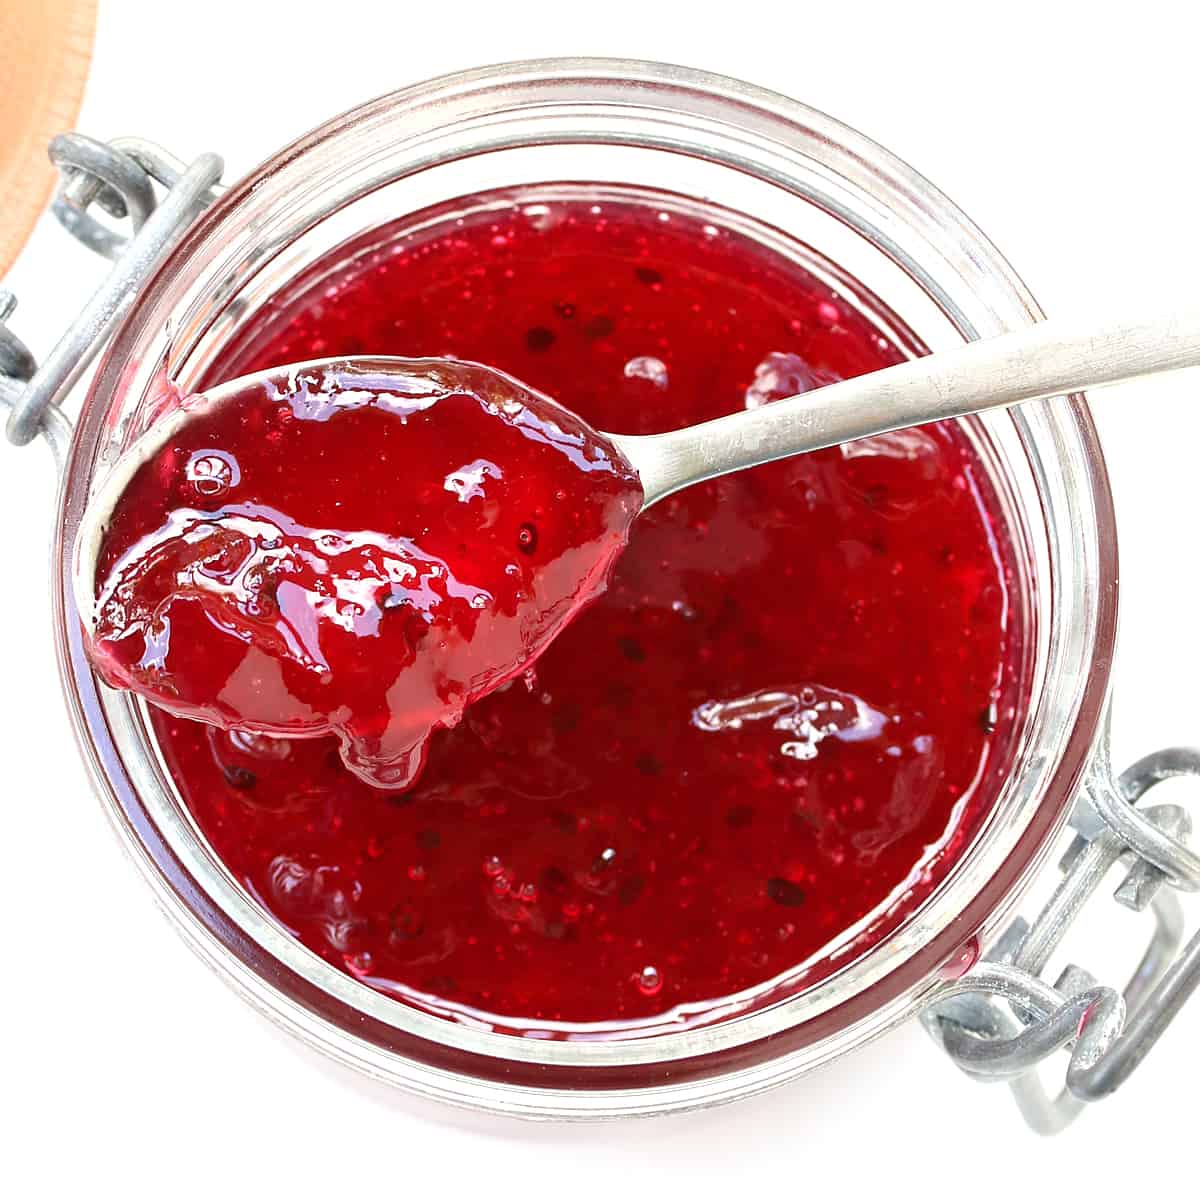 gooseberry jam recipe without pectin